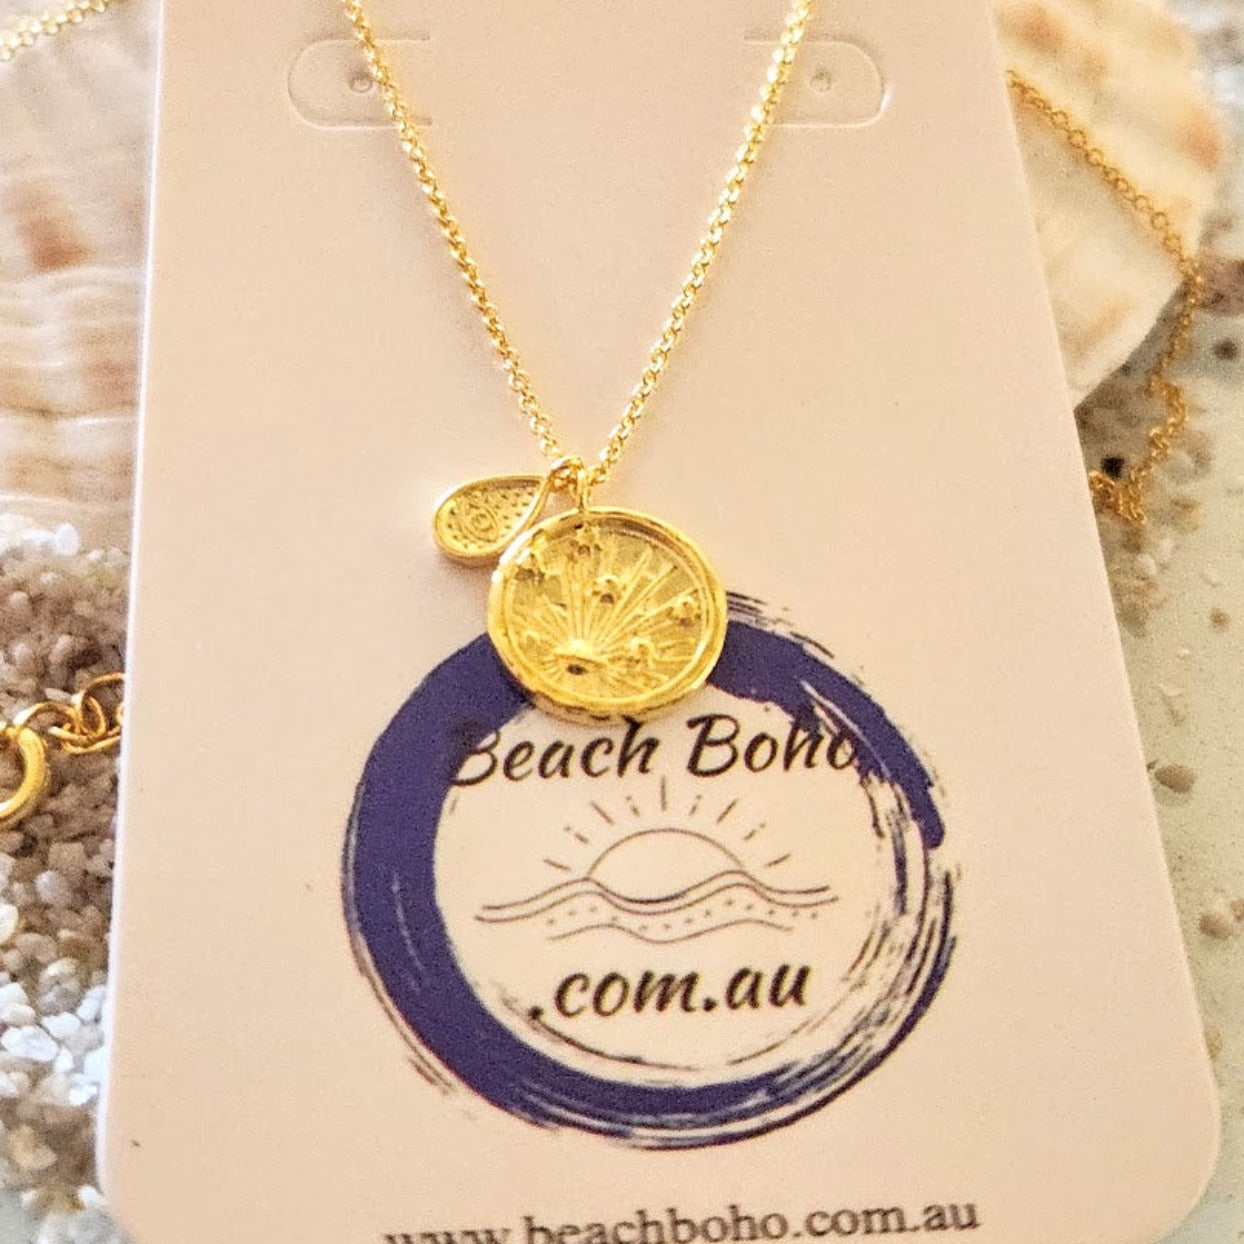 RISING SUN / GOLD VERMEIL 925 NECKLACE - Premium necklaces from www.beachboho.com.au - Just $65! Shop now at www.beachboho.com.au